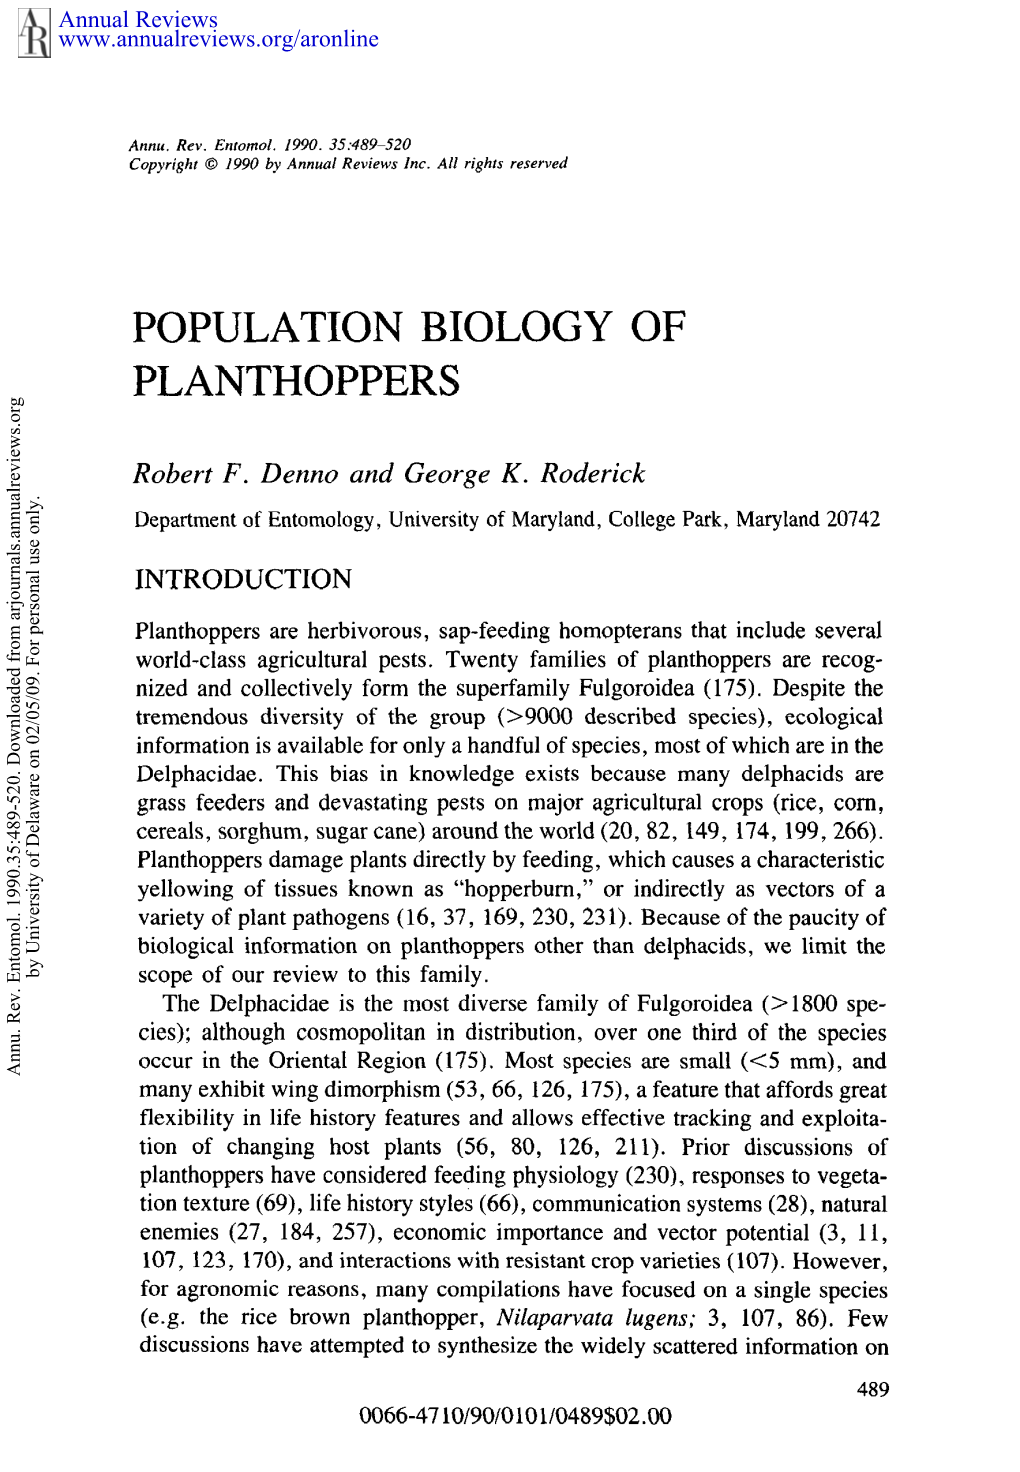 Population Biology of Planthoppers